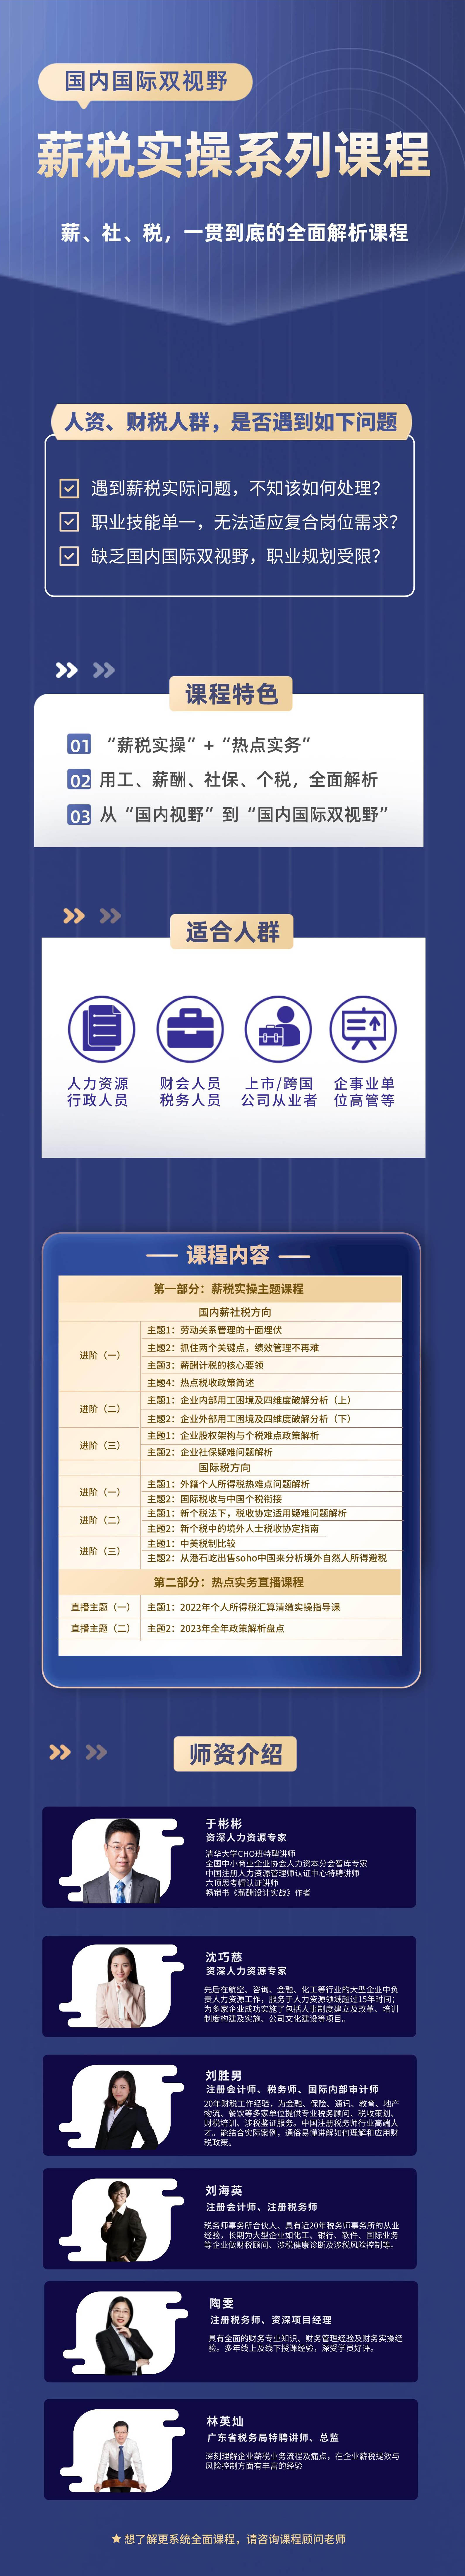 https://simg01.gaodunwangxiao.com/uploadfiles/product-center/202211/08/7a834_20221108105105.jpg